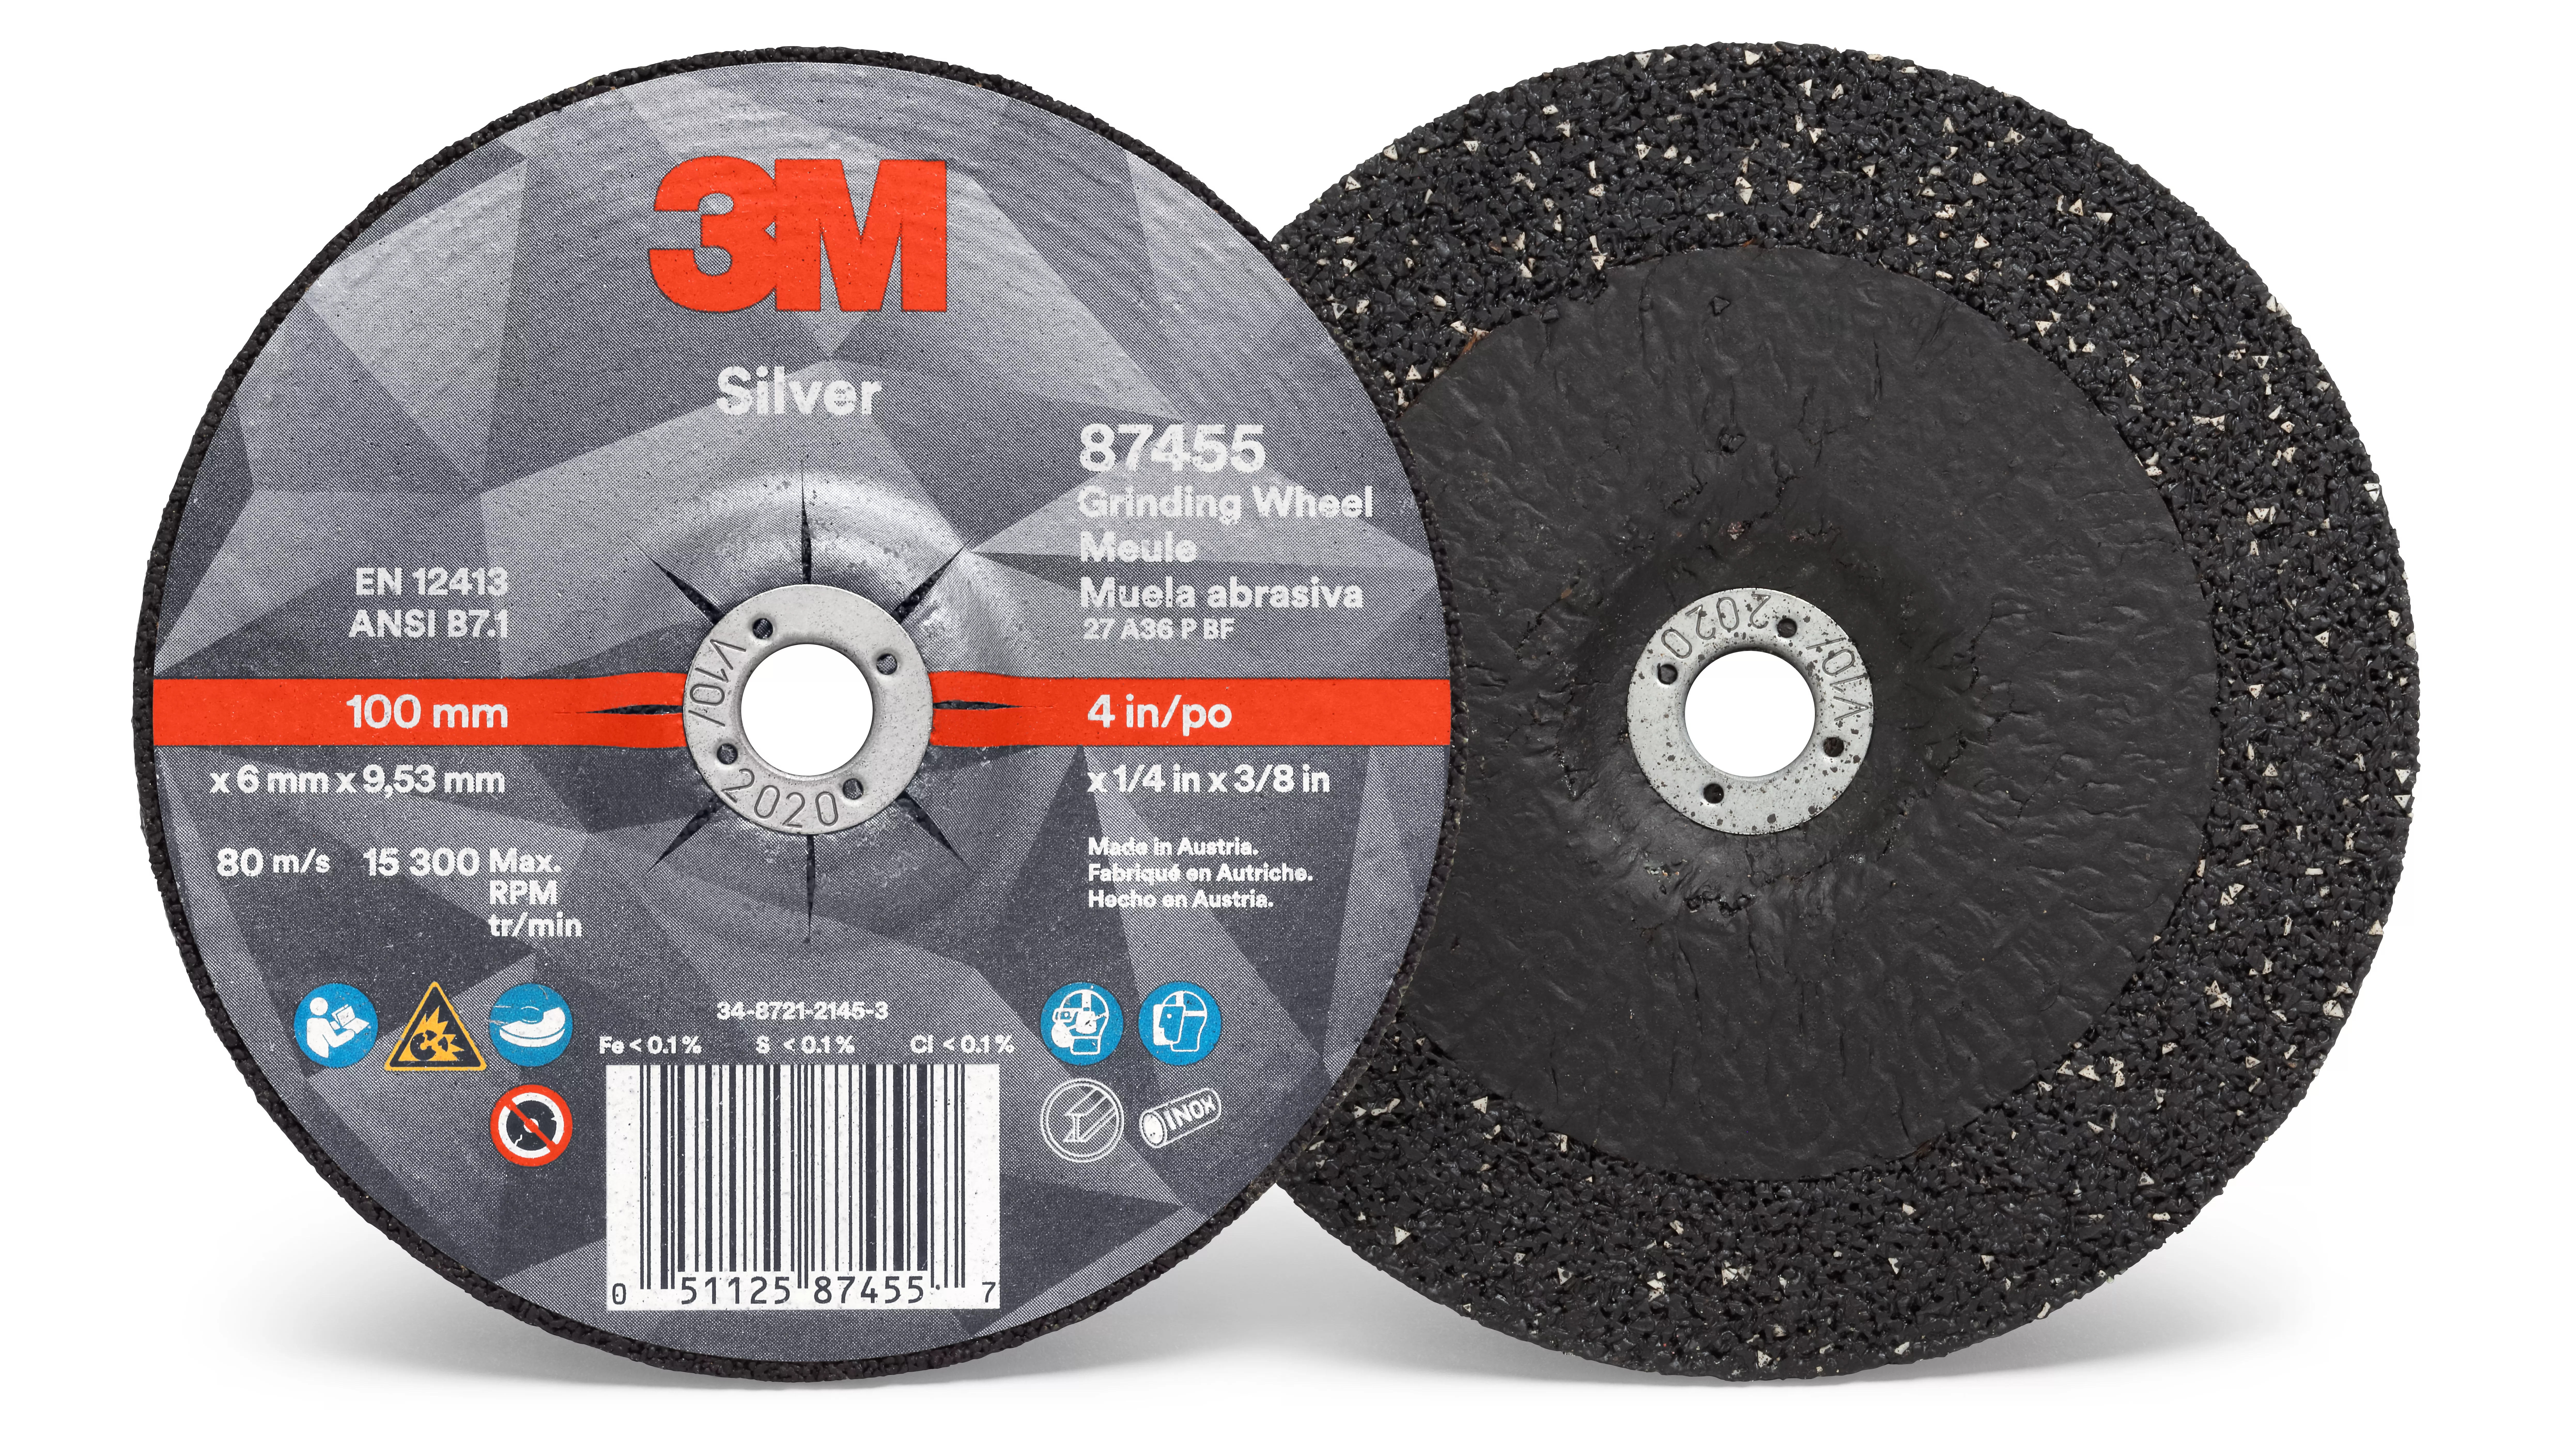 3M™ Silver Depressed Center Grinding Wheel, 87455, T27, 4 in x 1/4 in x
3/8 in, 10/Carton, 20 ea/Case